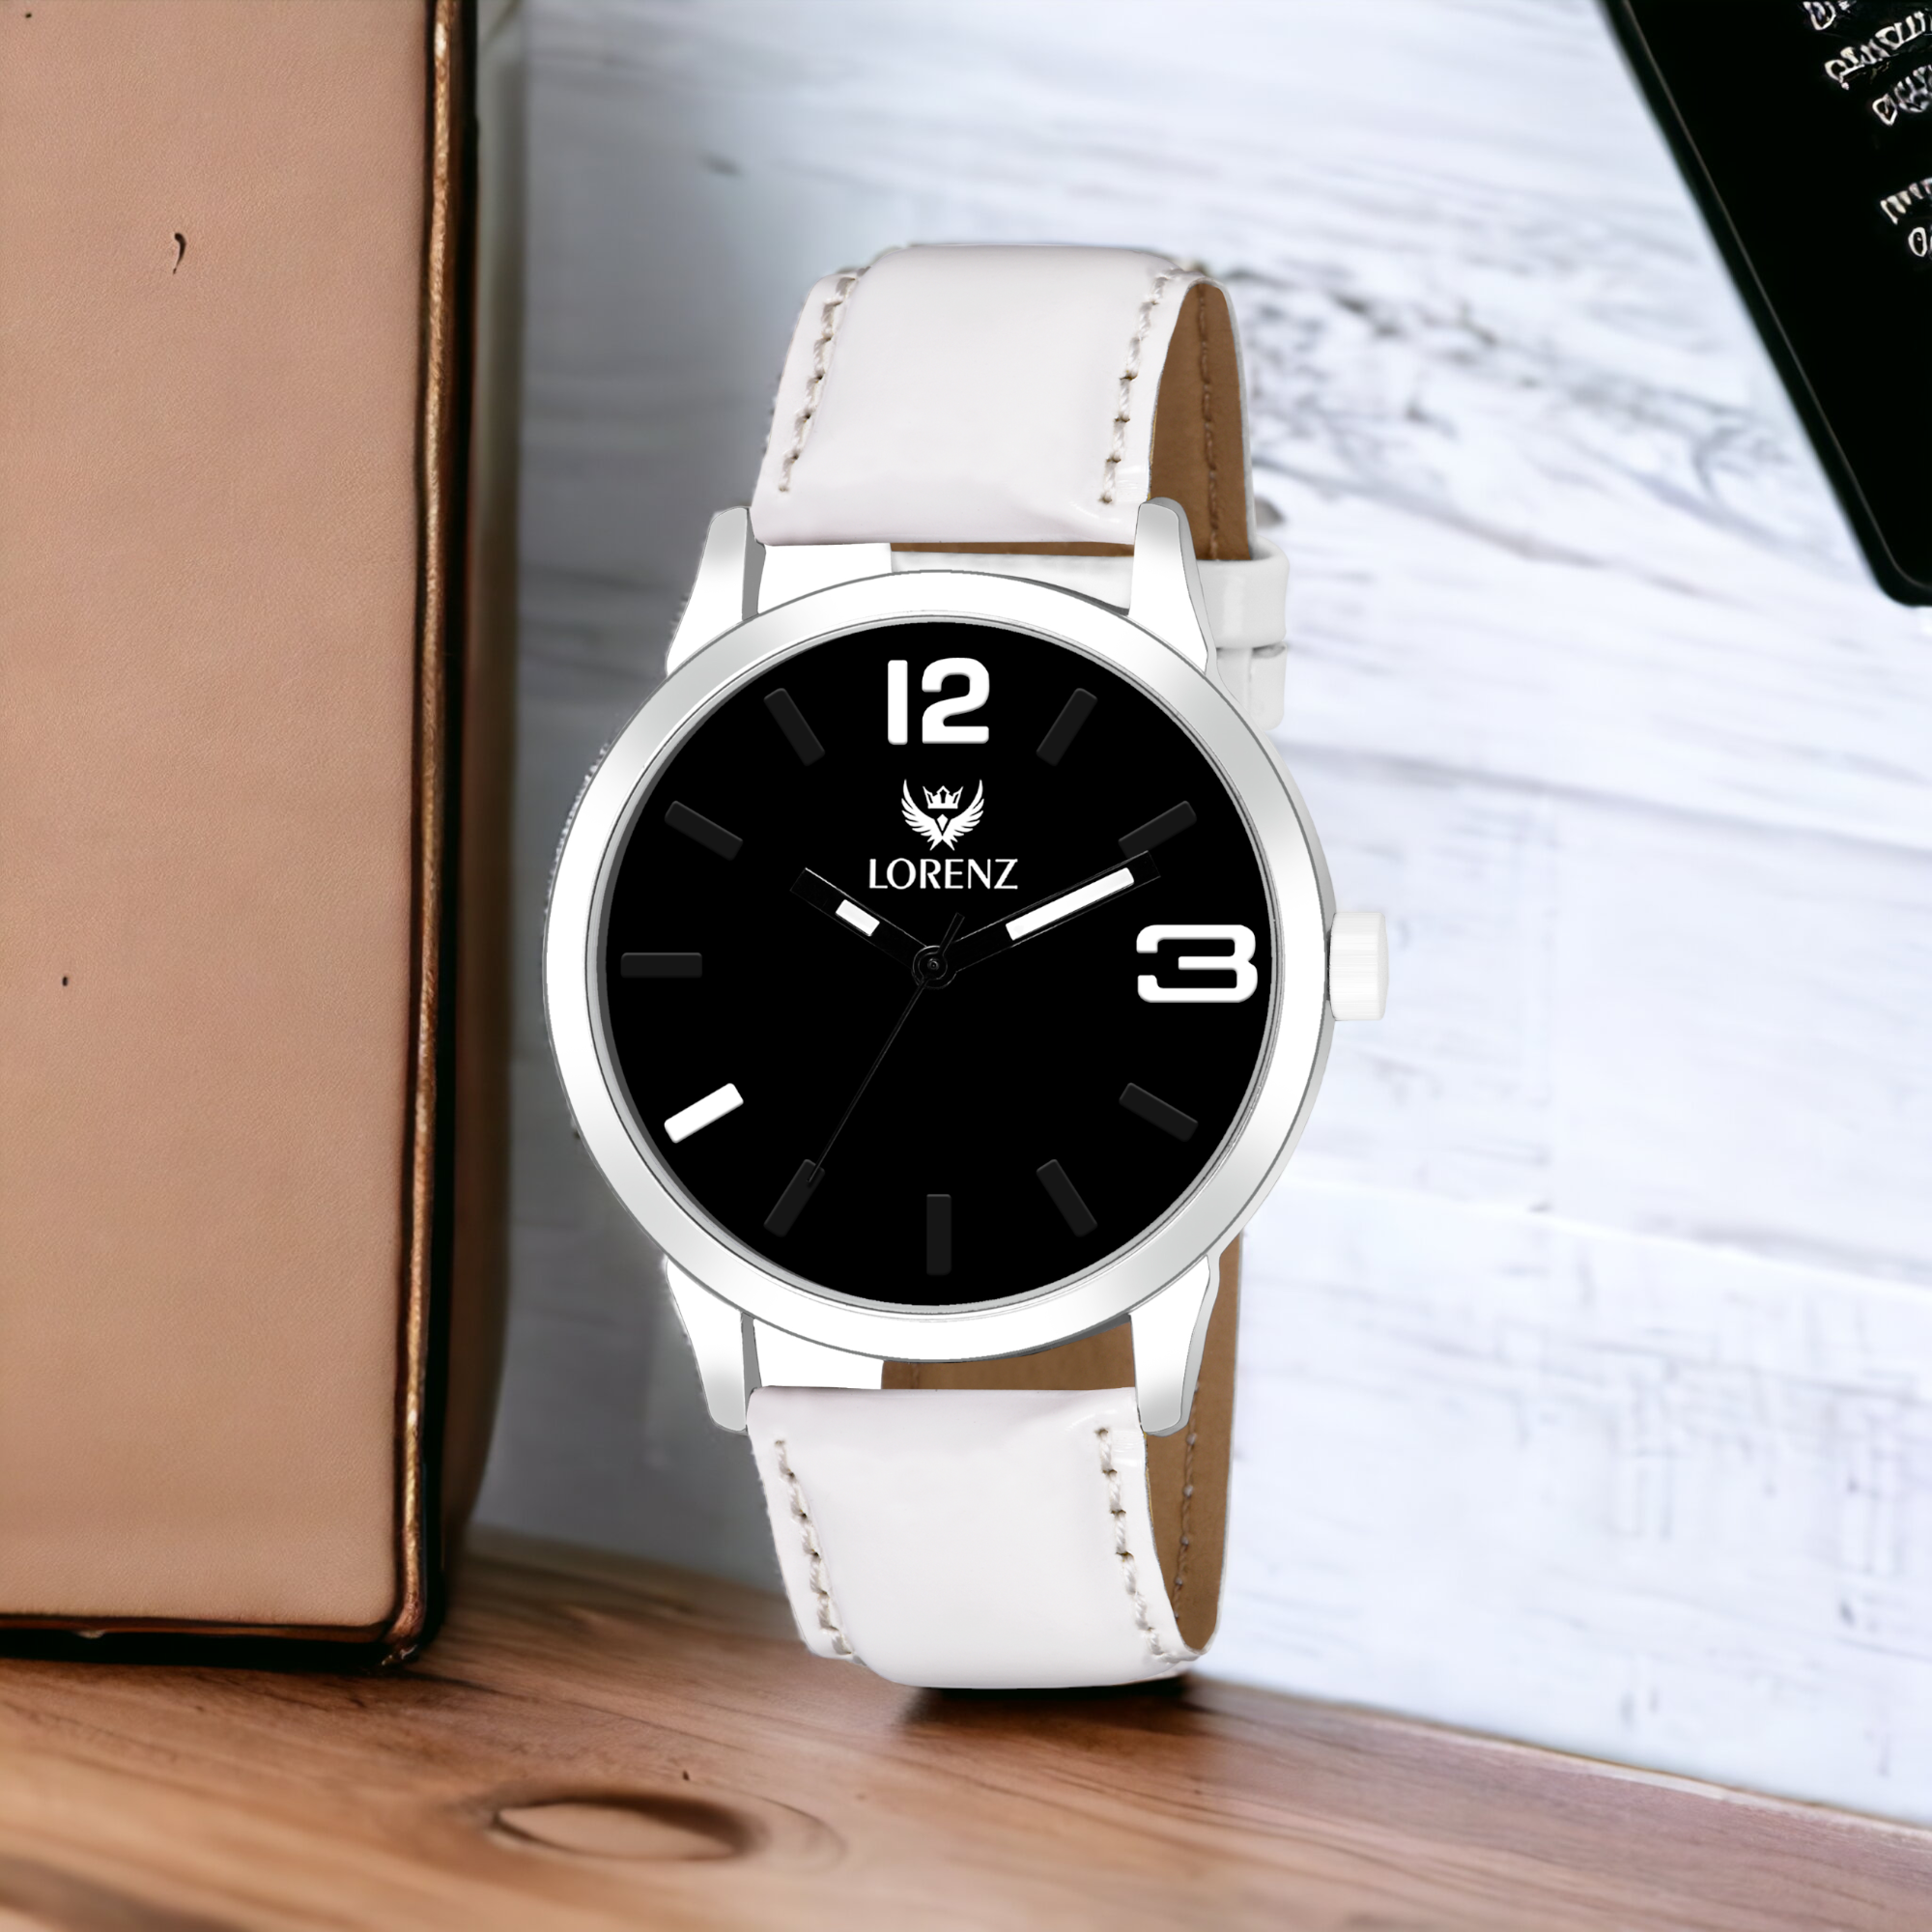 Lorenz Men's Black Dial Watch with White Case